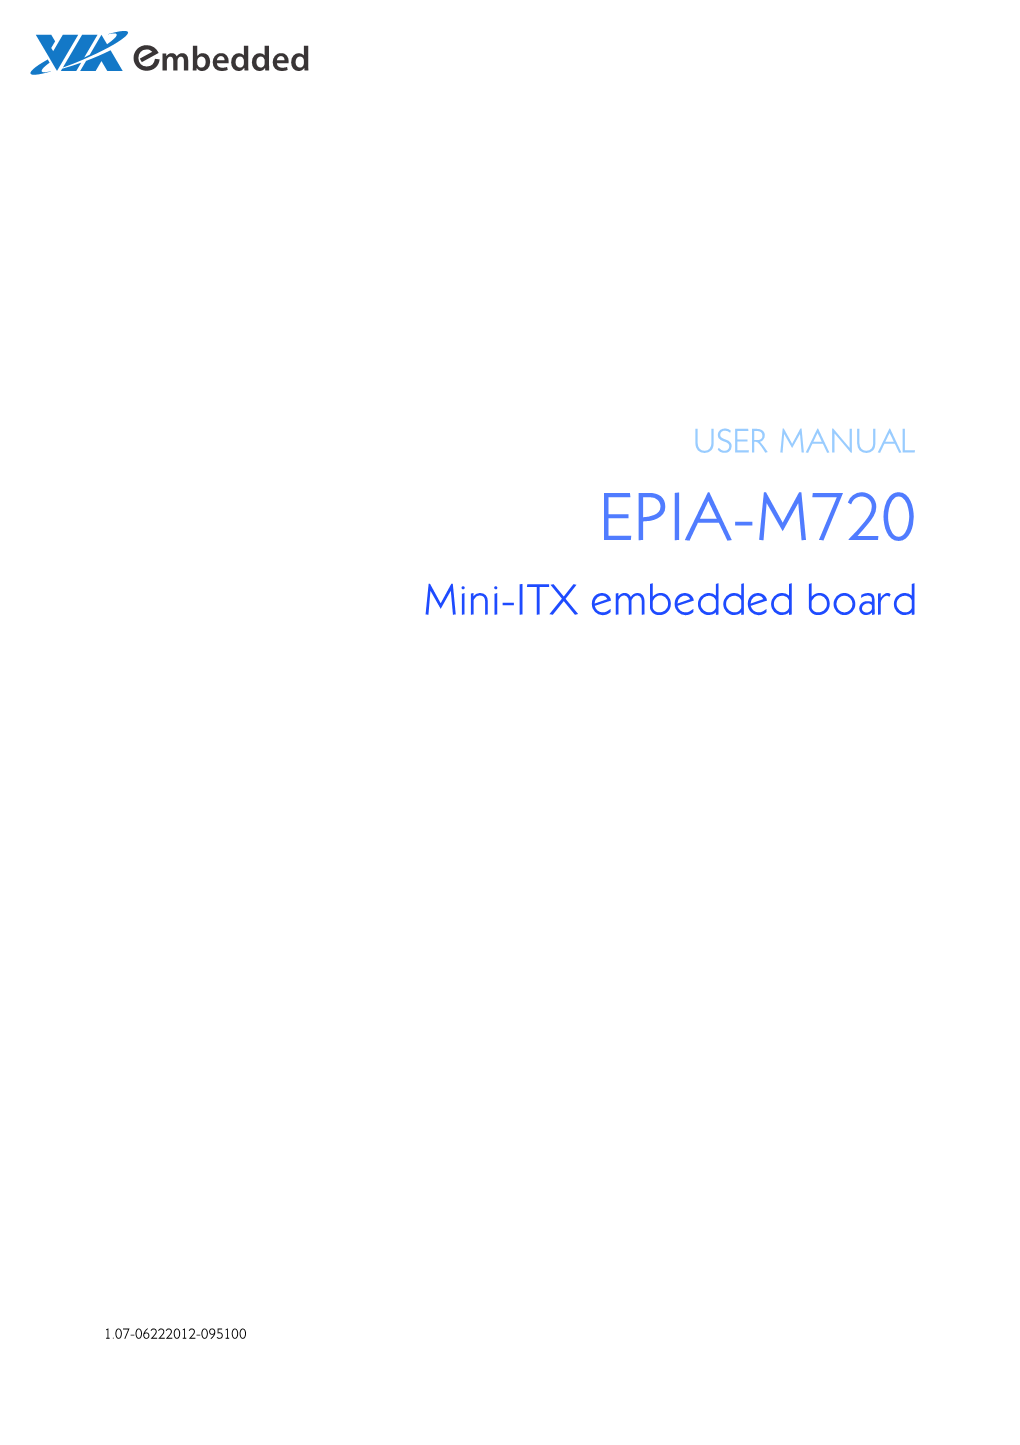 EPIA-M720 Mini-ITX Embedded Board